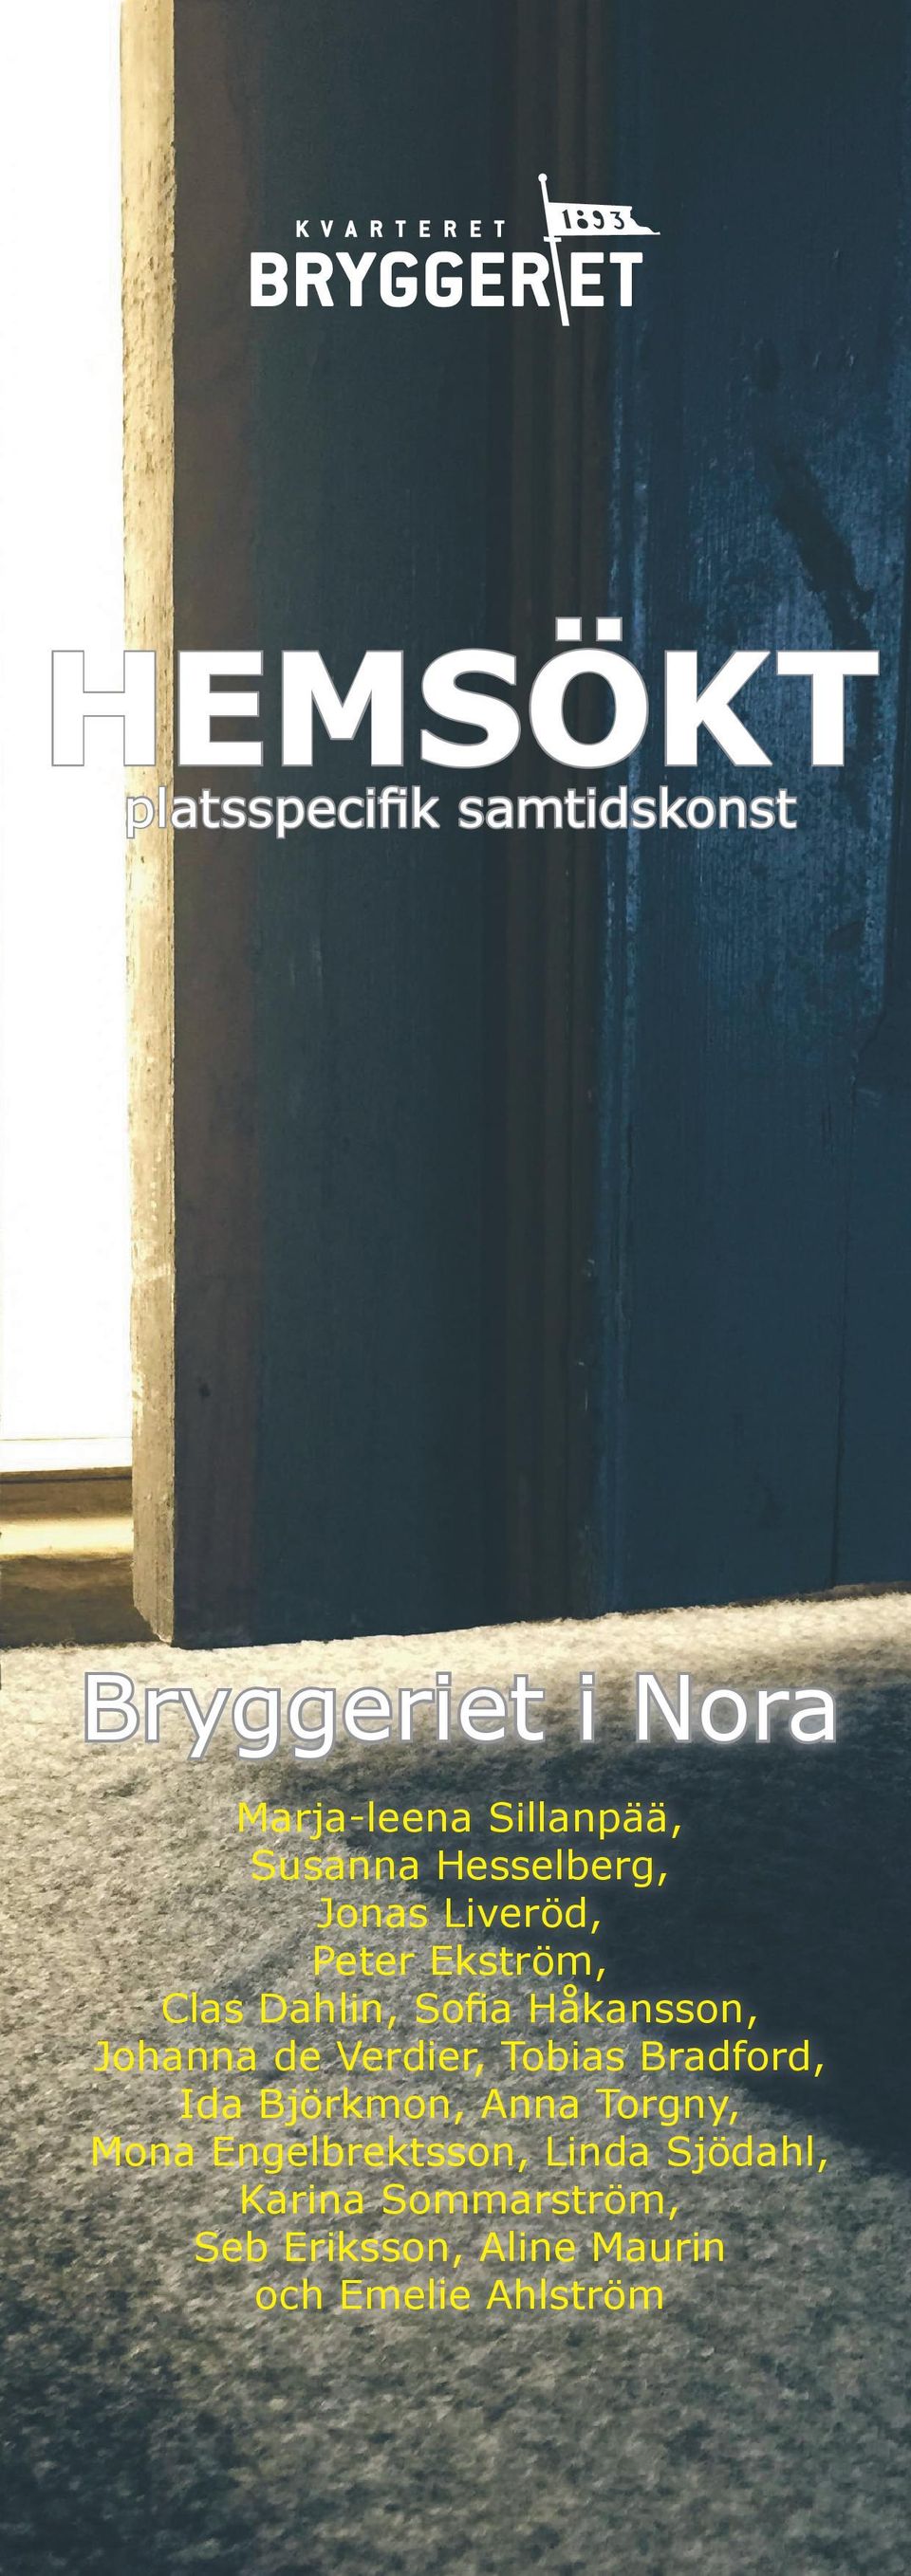 Johanna de Verdier, Tobias Bradford, Ida Björkmon, Anna Torgny, Mona